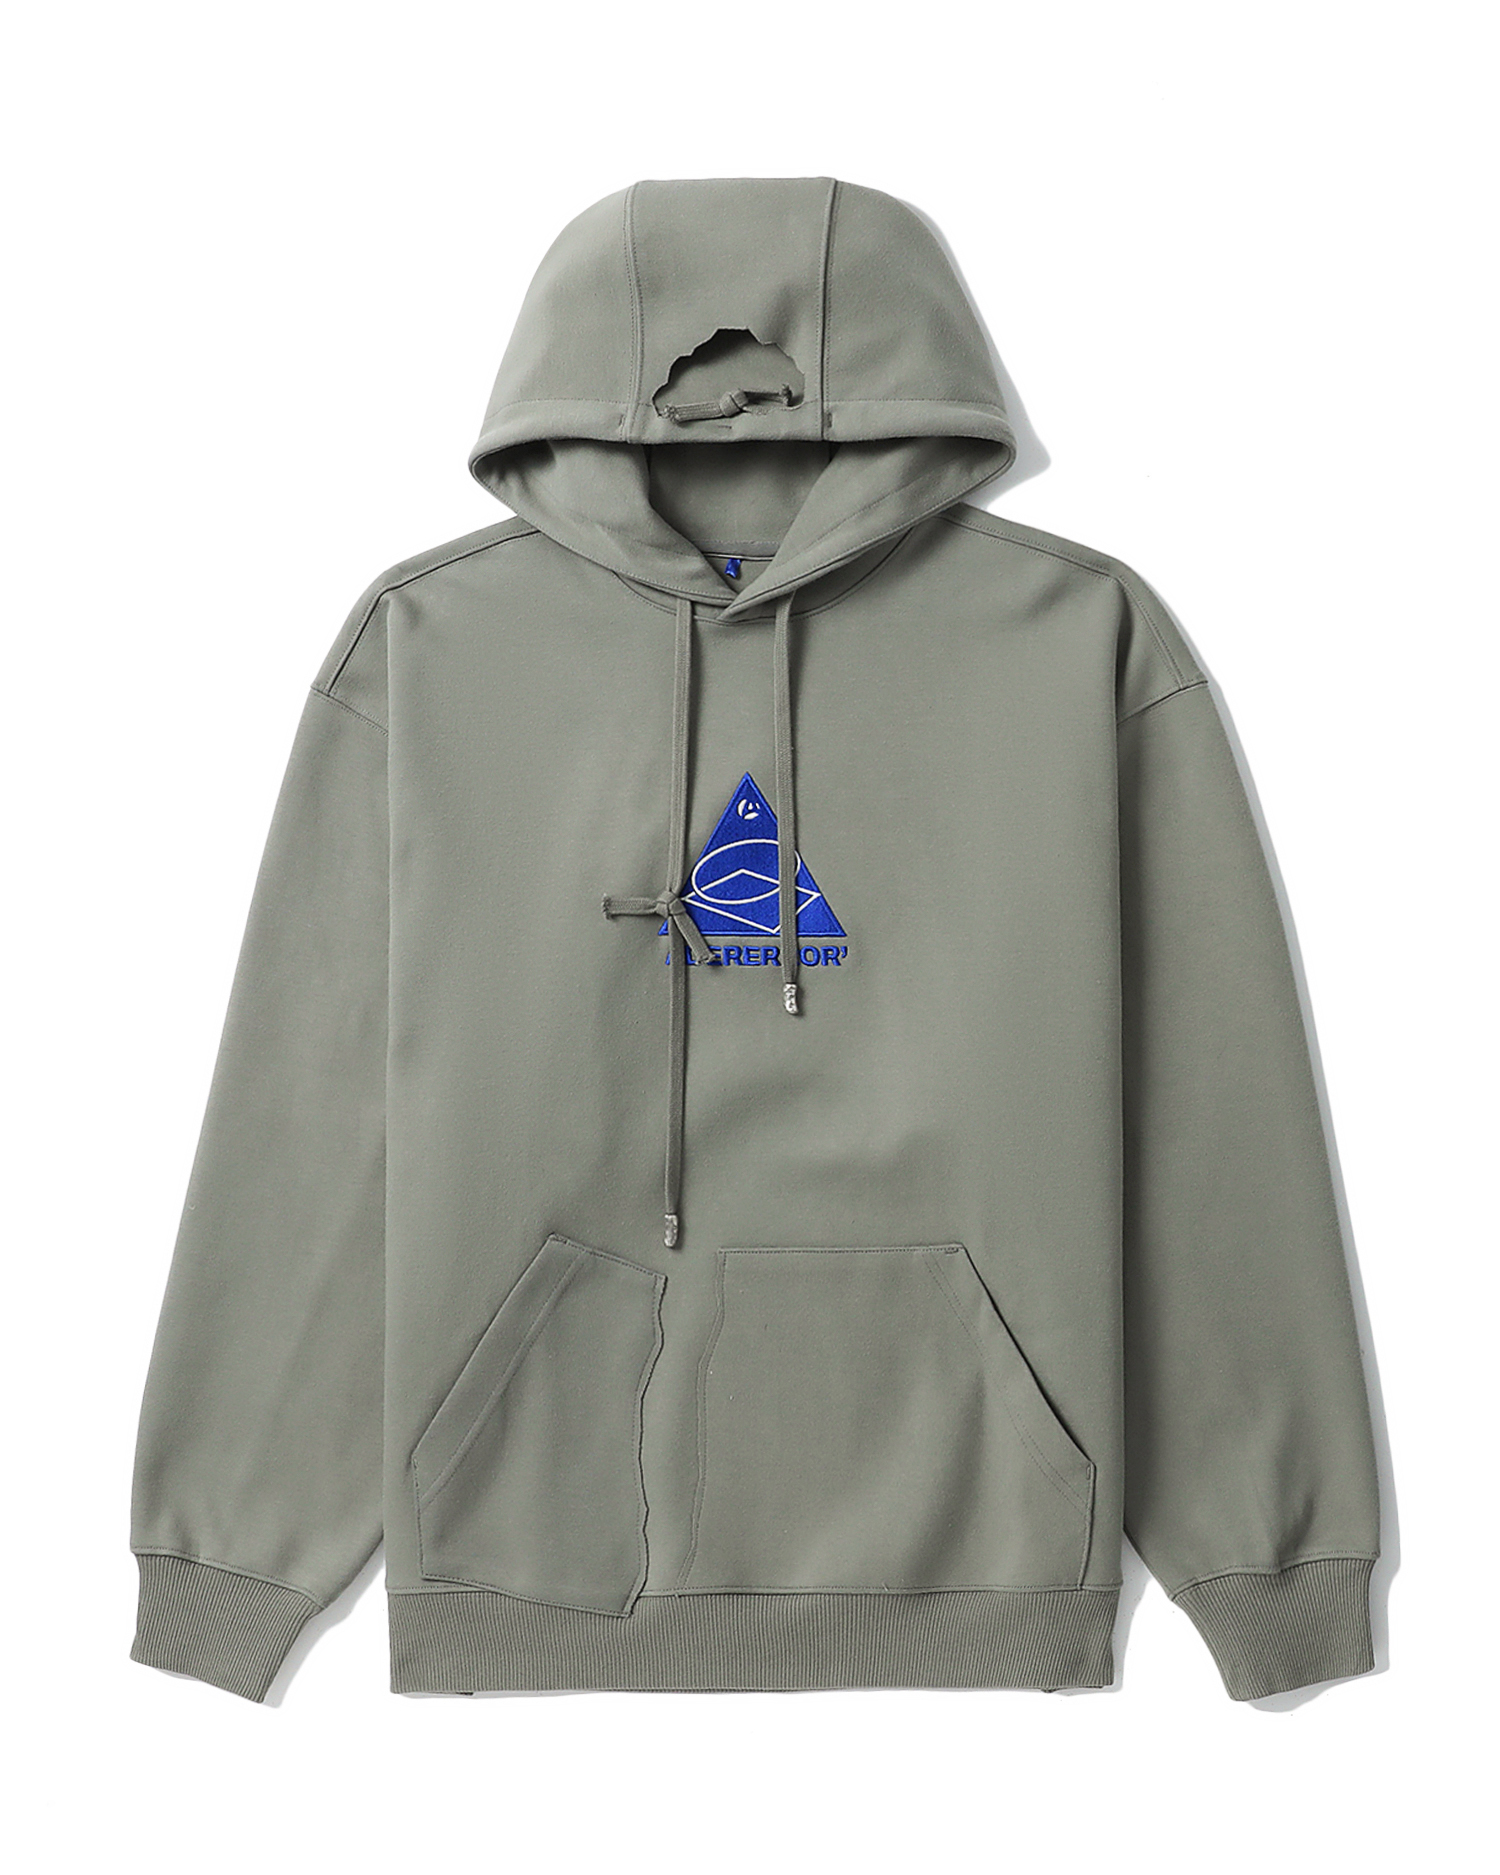 ADER error Geomid logo hoodie| ITeSHOP